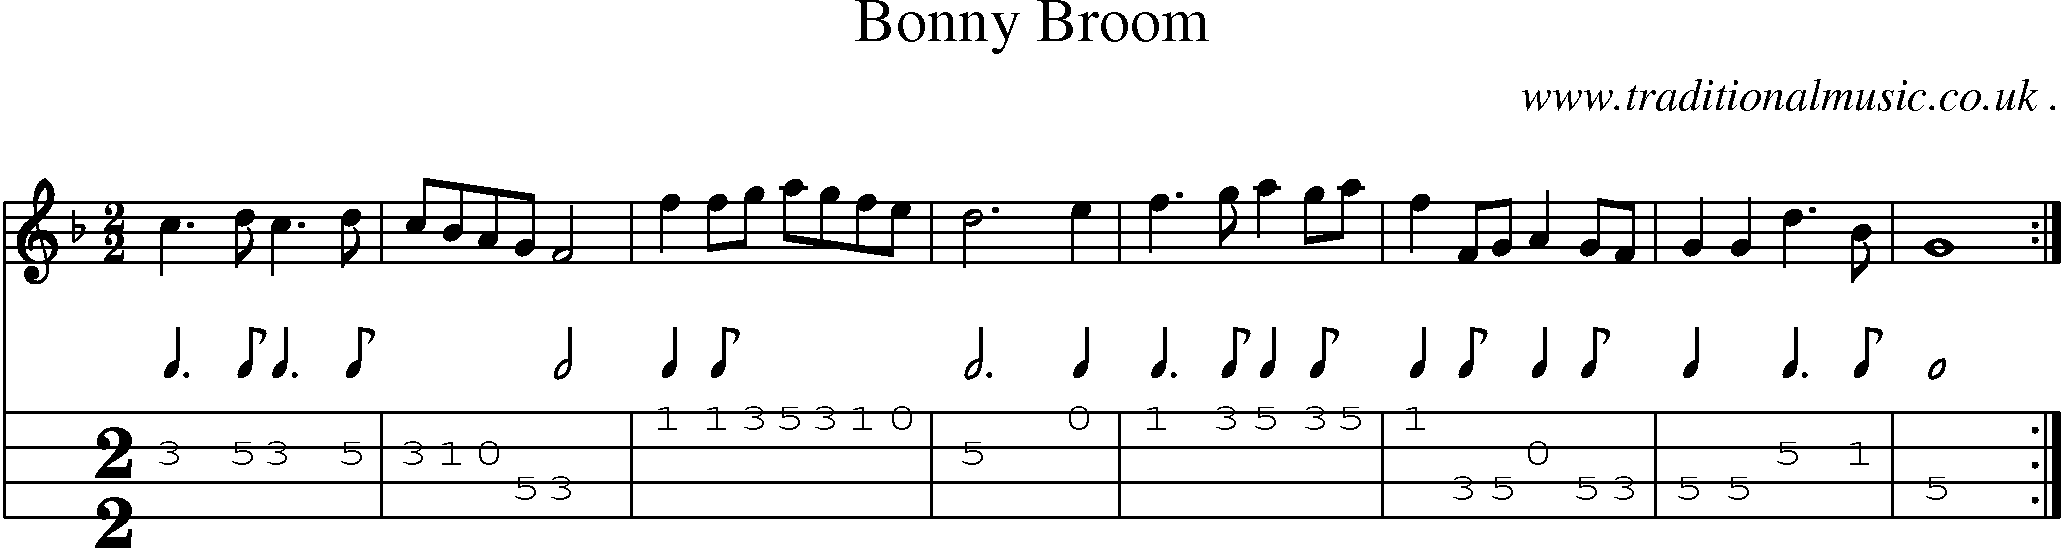 Sheet-Music and Mandolin Tabs for Bonny Broom